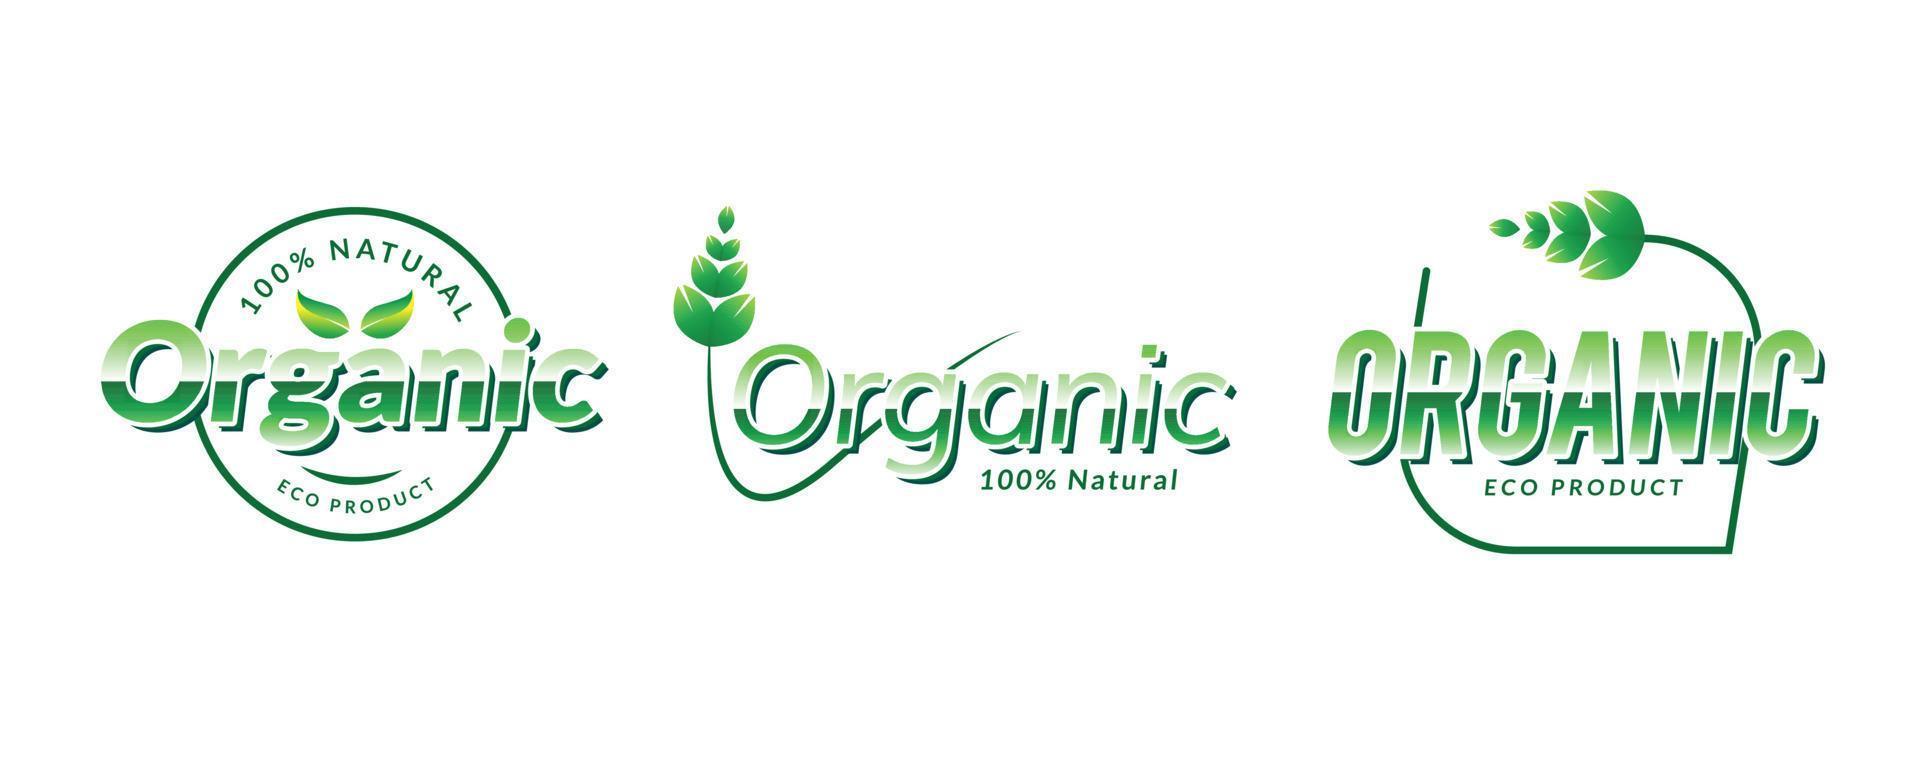 organic and nature logo design vector